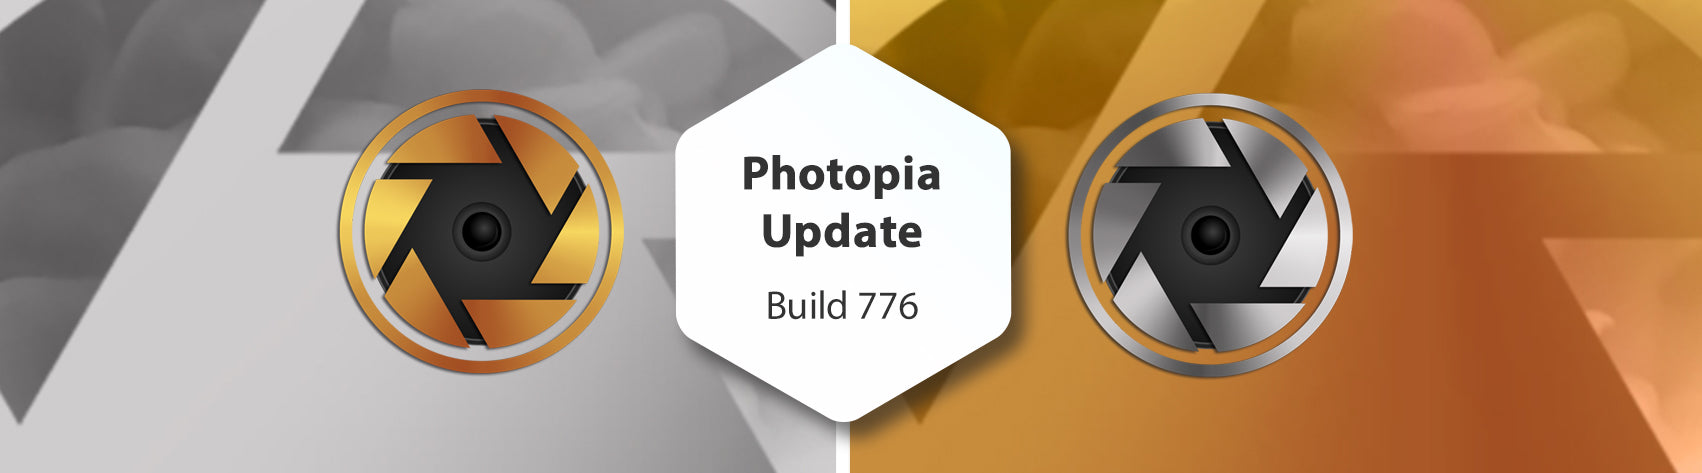 Photopia Update - Build 776